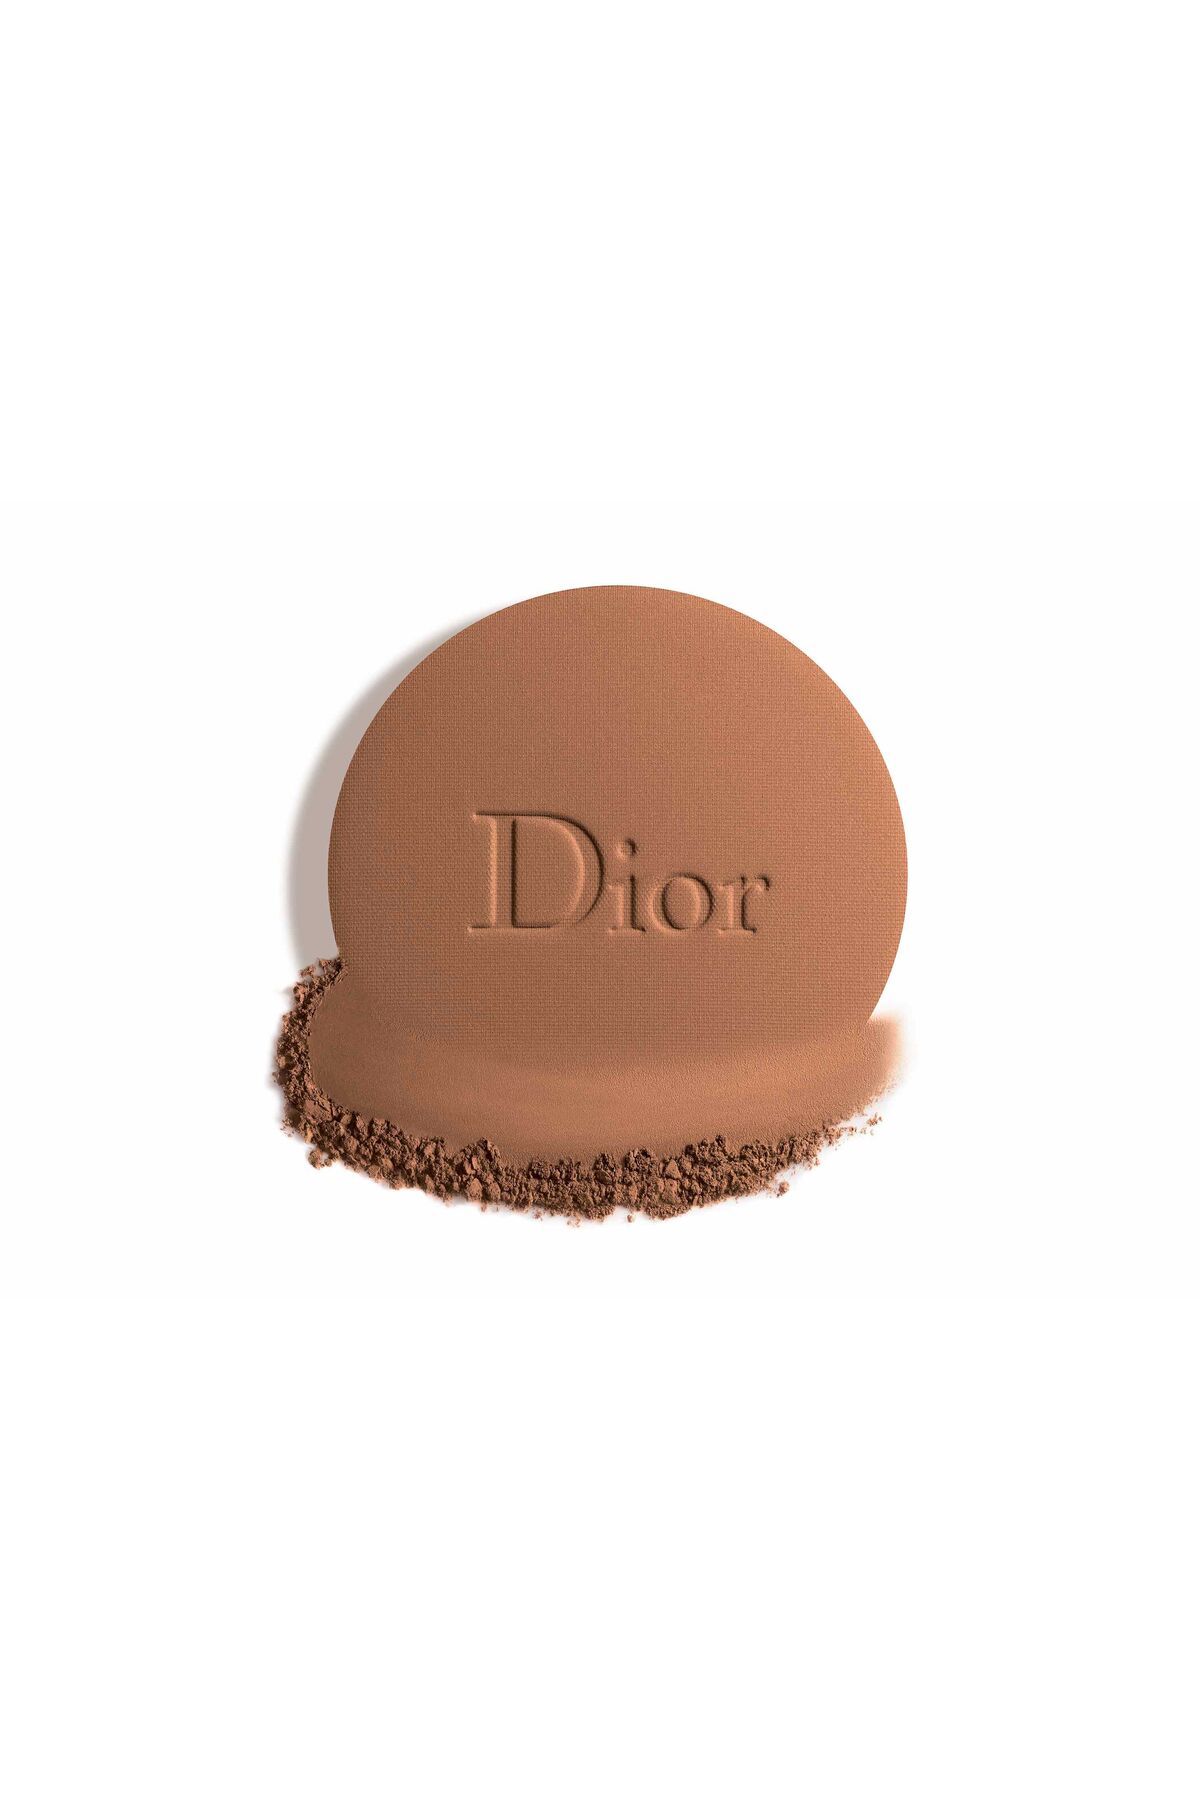 Dior پودر برنز طبیعی برای ماندگاری طولانی با رطوبت دائمی و درخشش دائمی